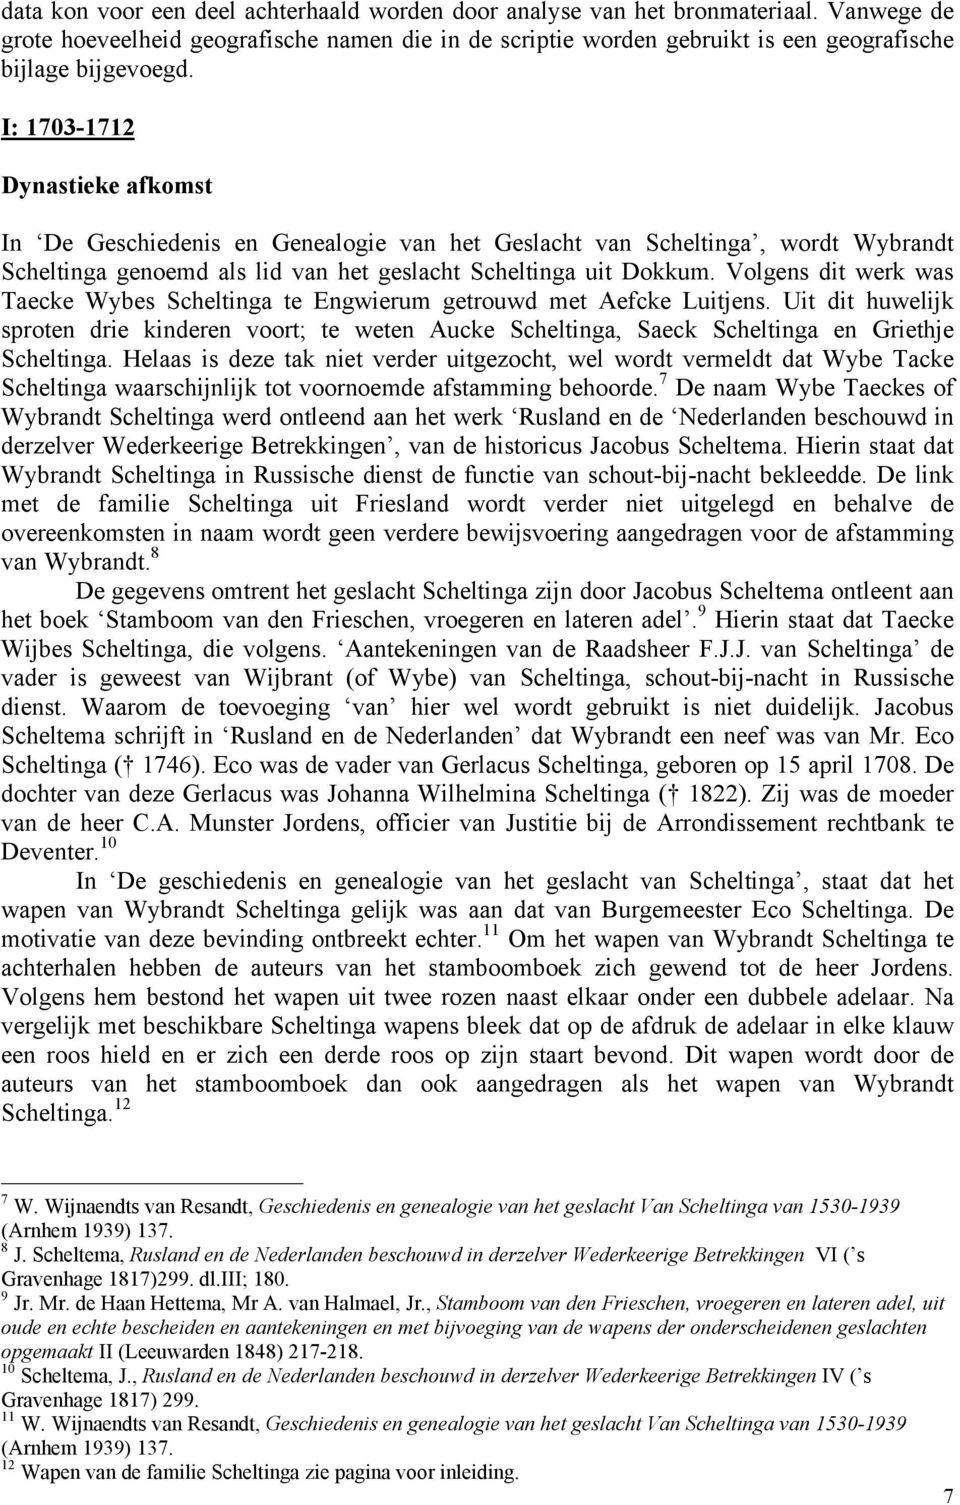 Volgens dit werk was Taecke Wybes Scheltinga te Engwierum getrouwd met Aefcke Luitjens.